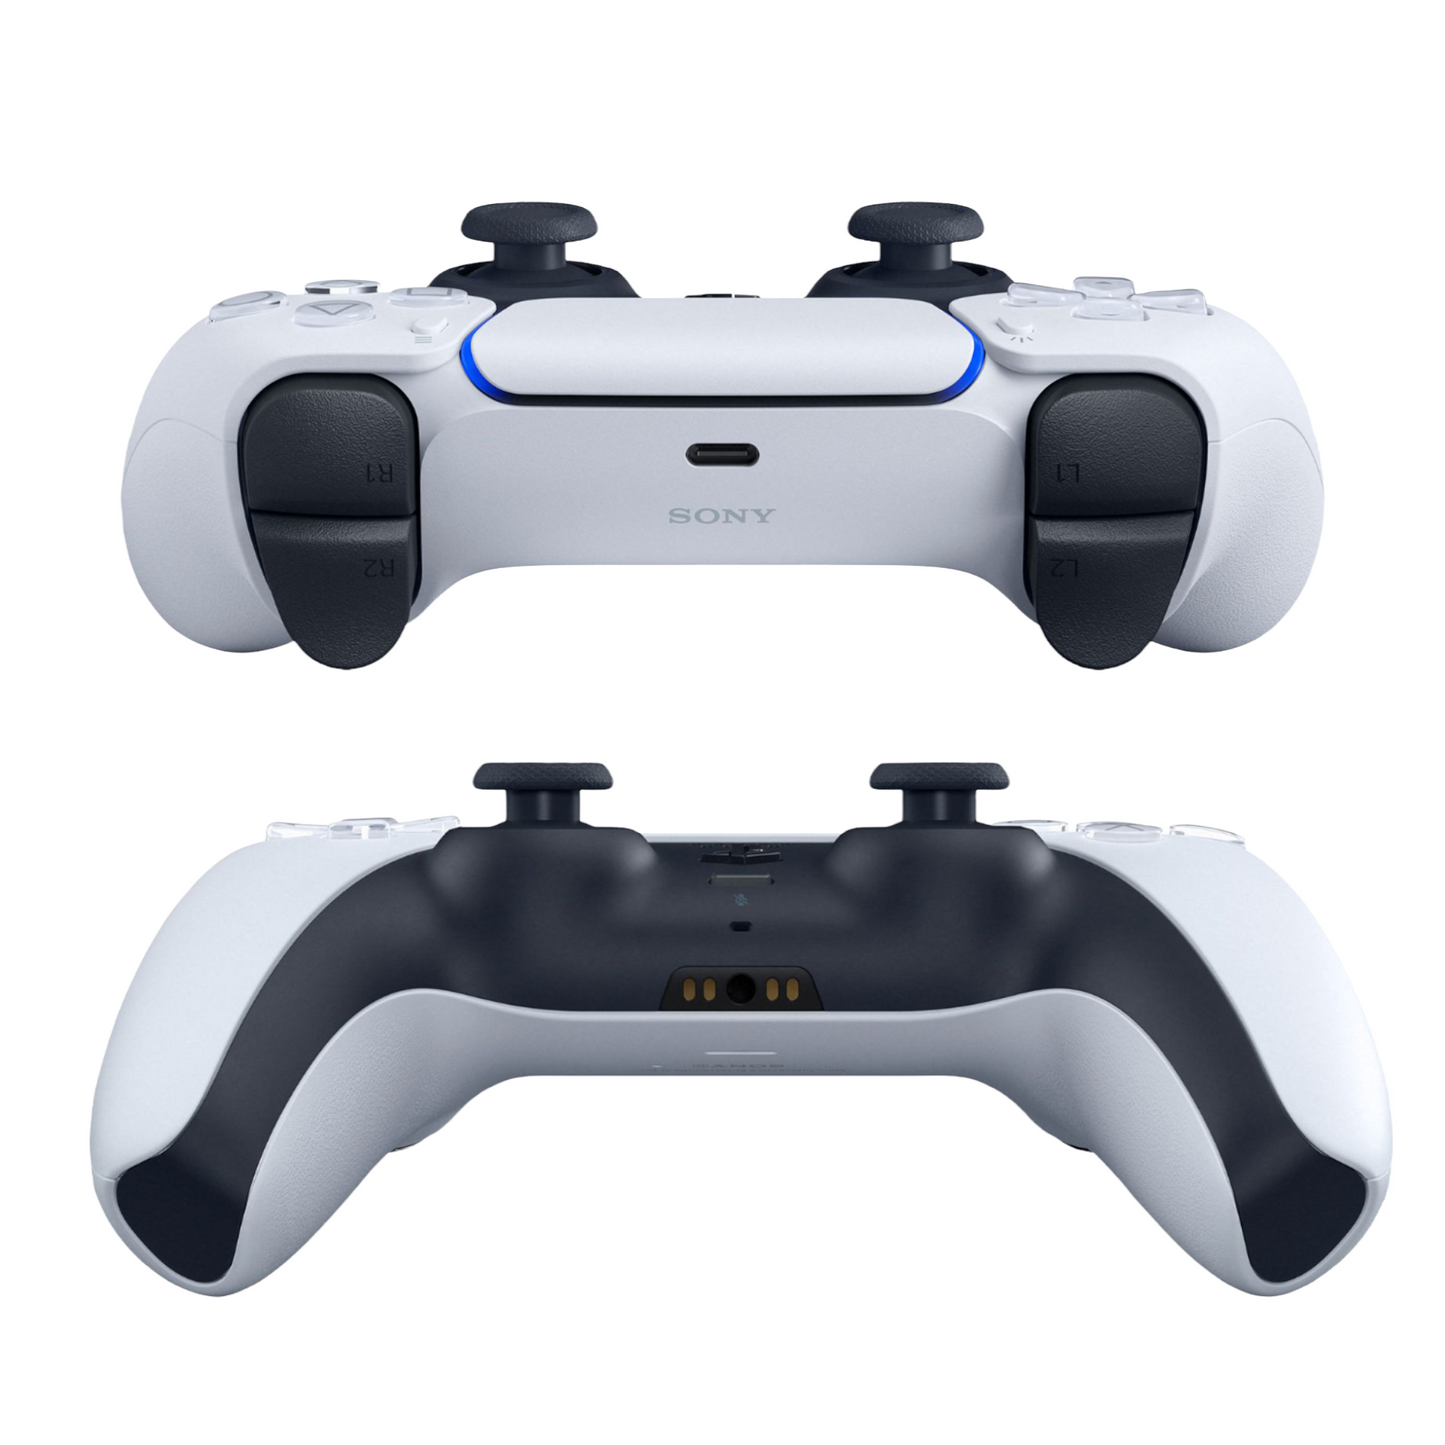 Sony - PlayStation 5 - DualSense Wireless Controller